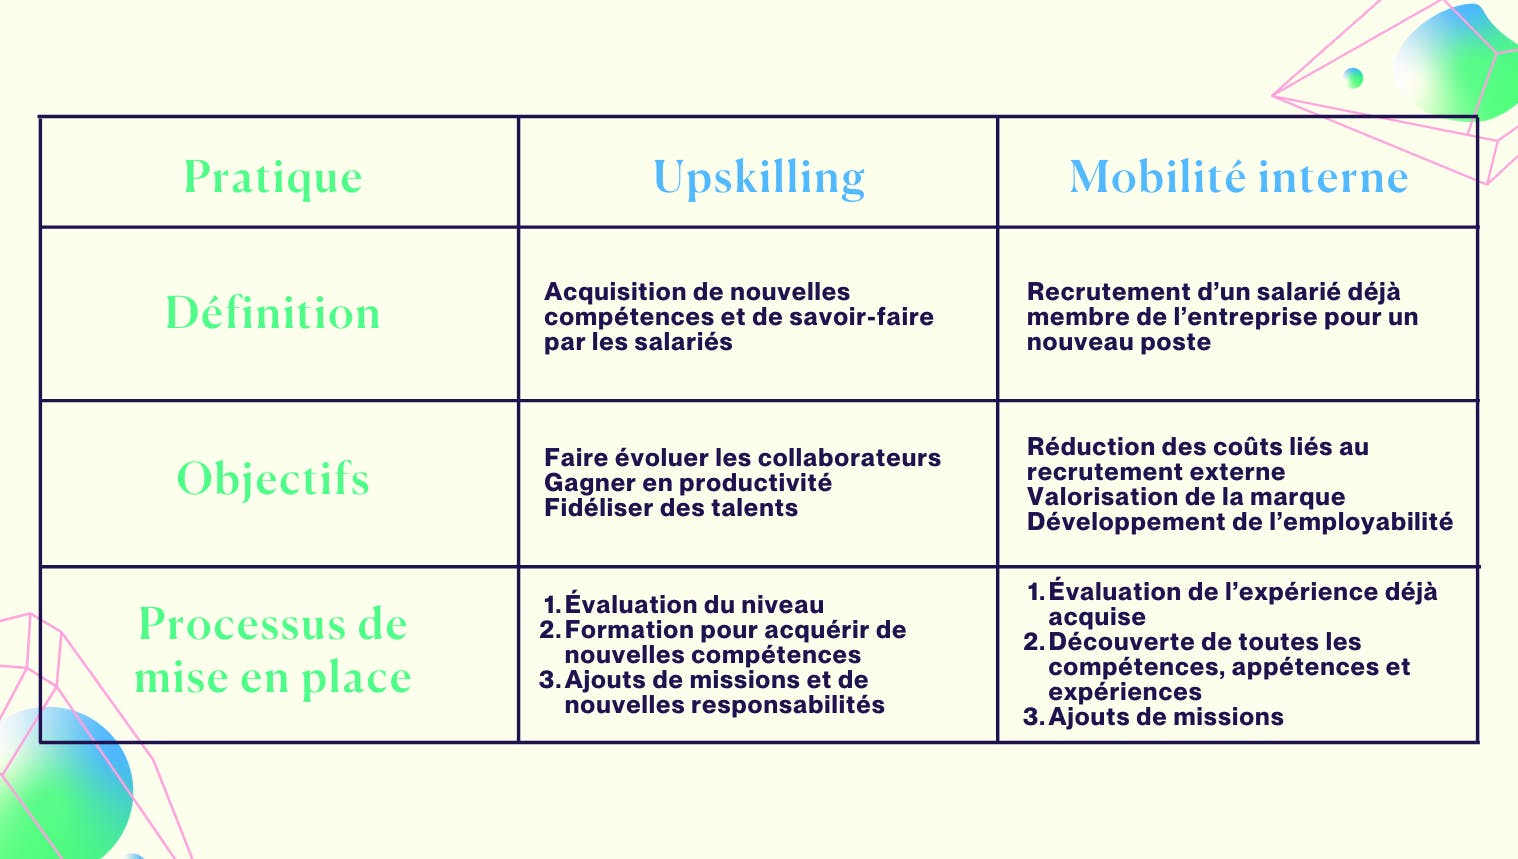 upskilling vs mobilite interne